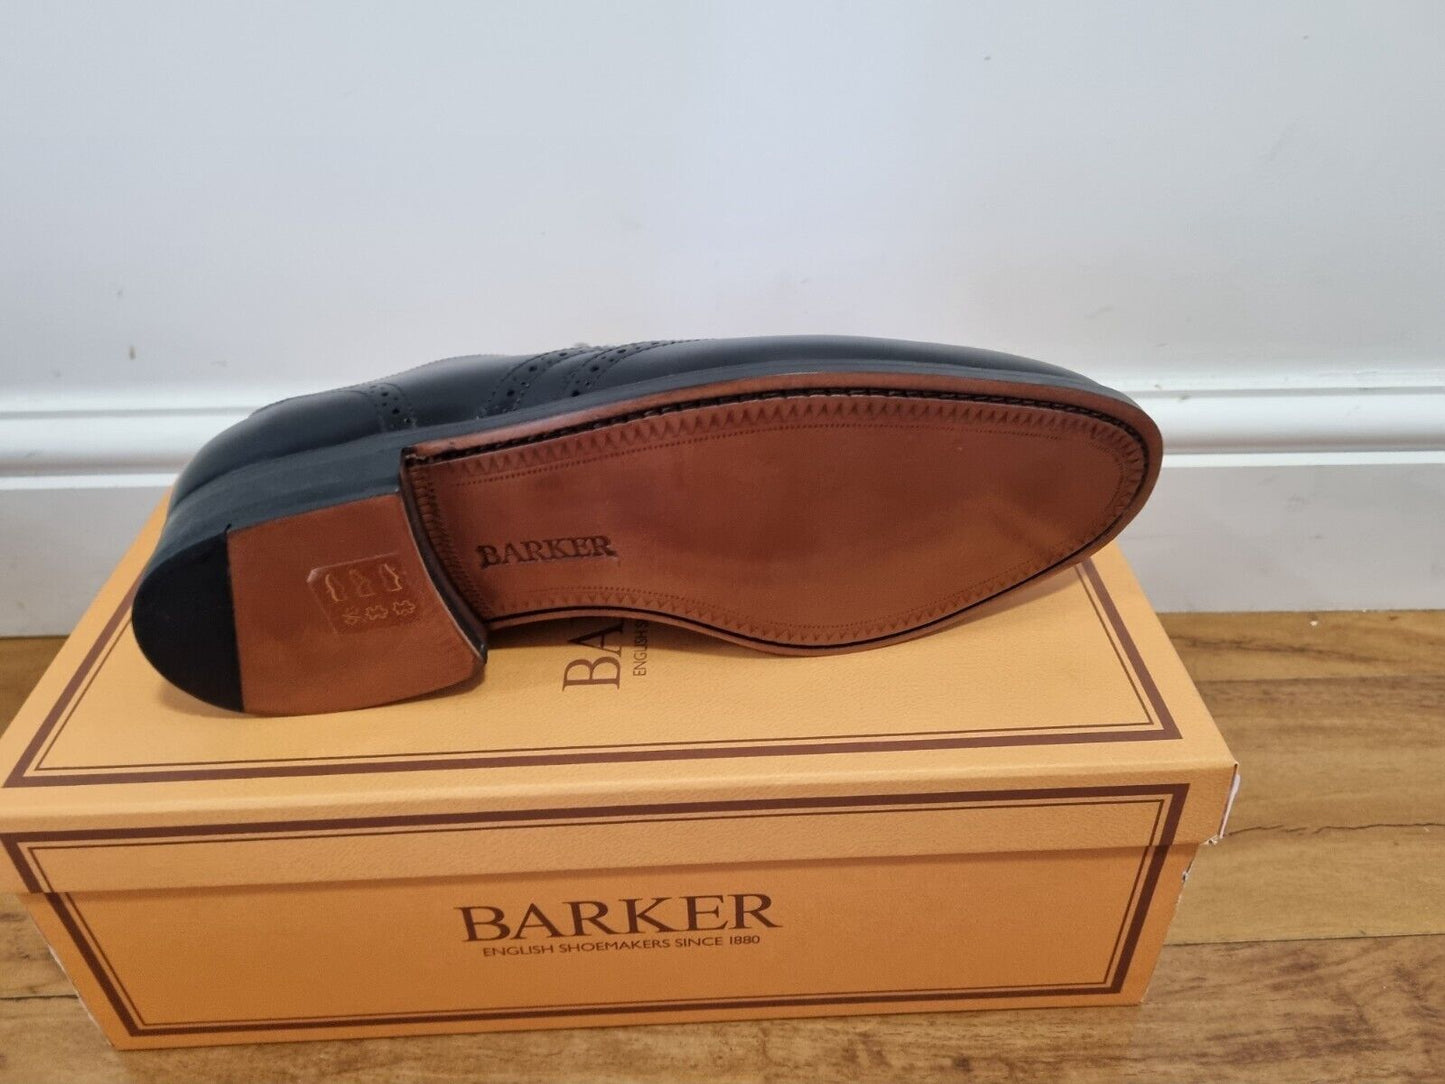 Barker - Glasgow - Black Calf Leather Brogue